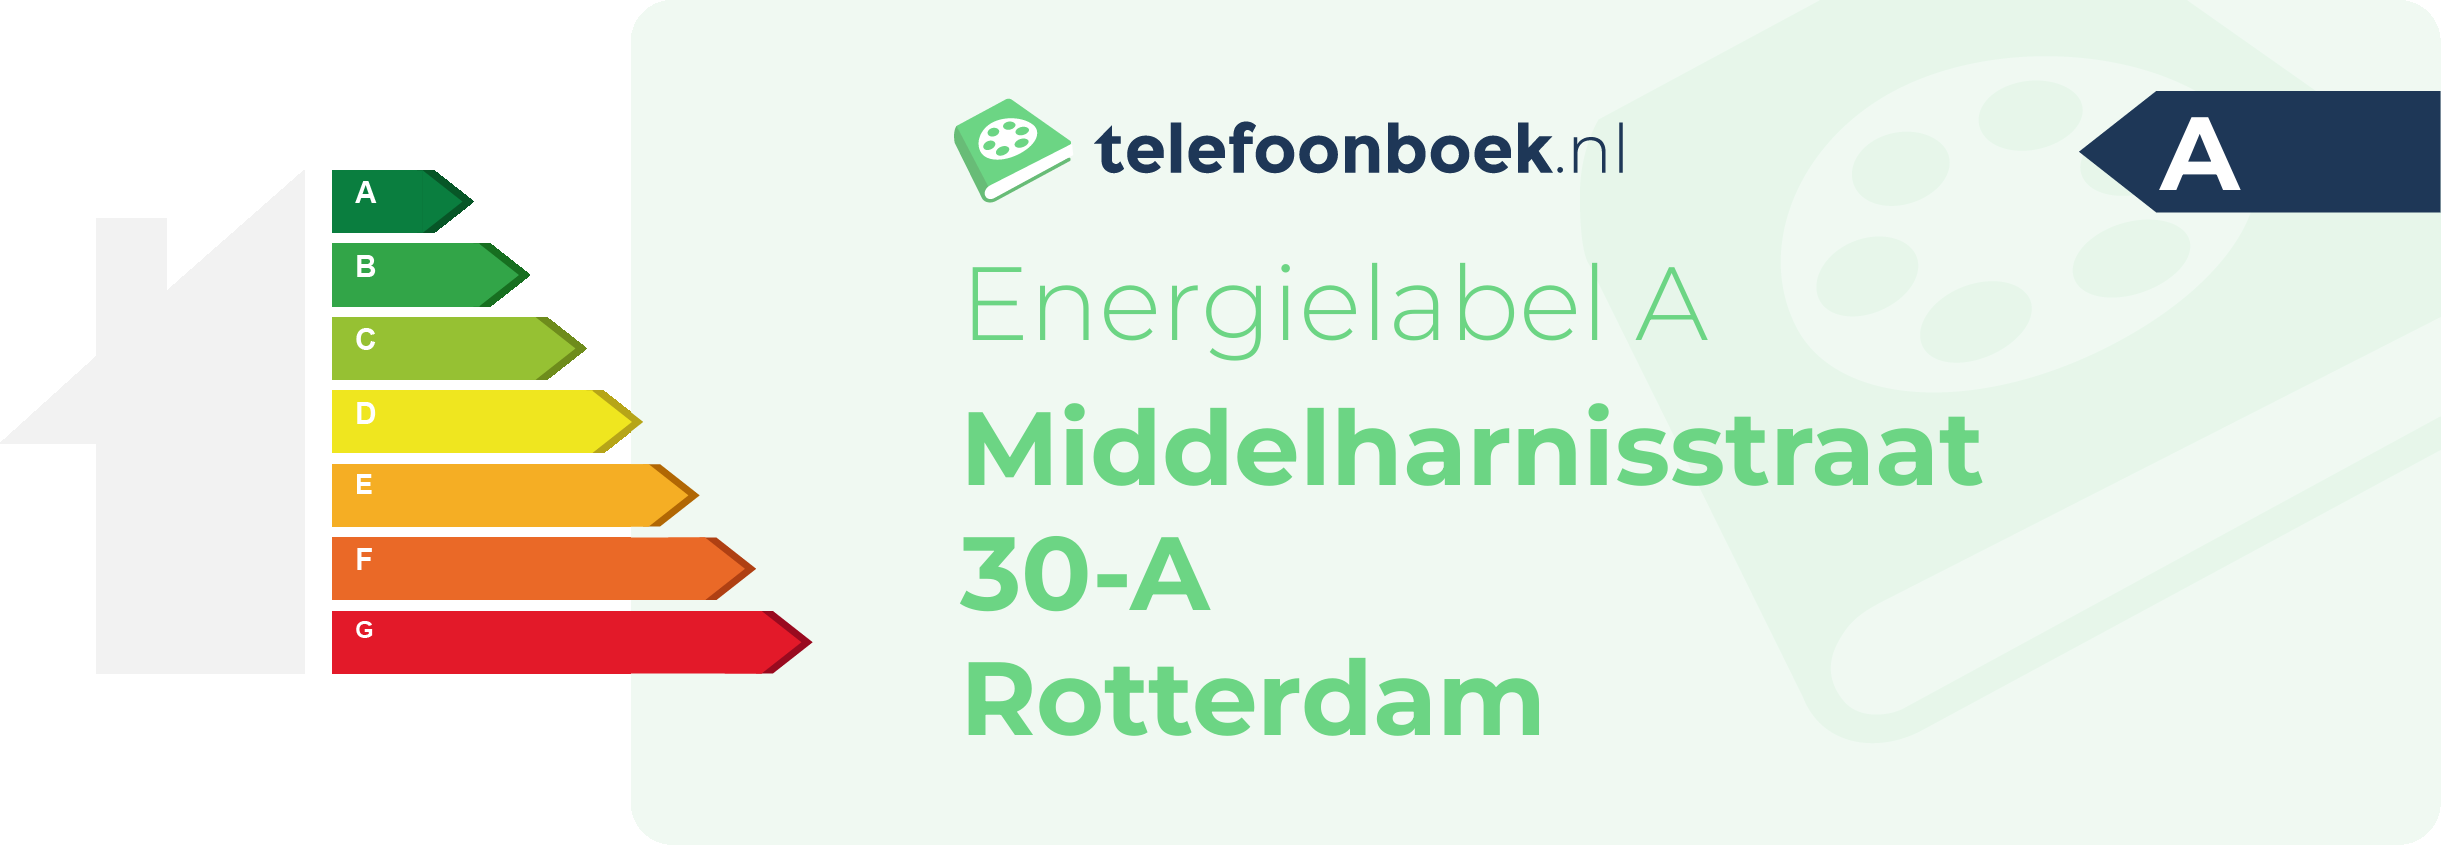 Energielabel Middelharnisstraat 30-A Rotterdam